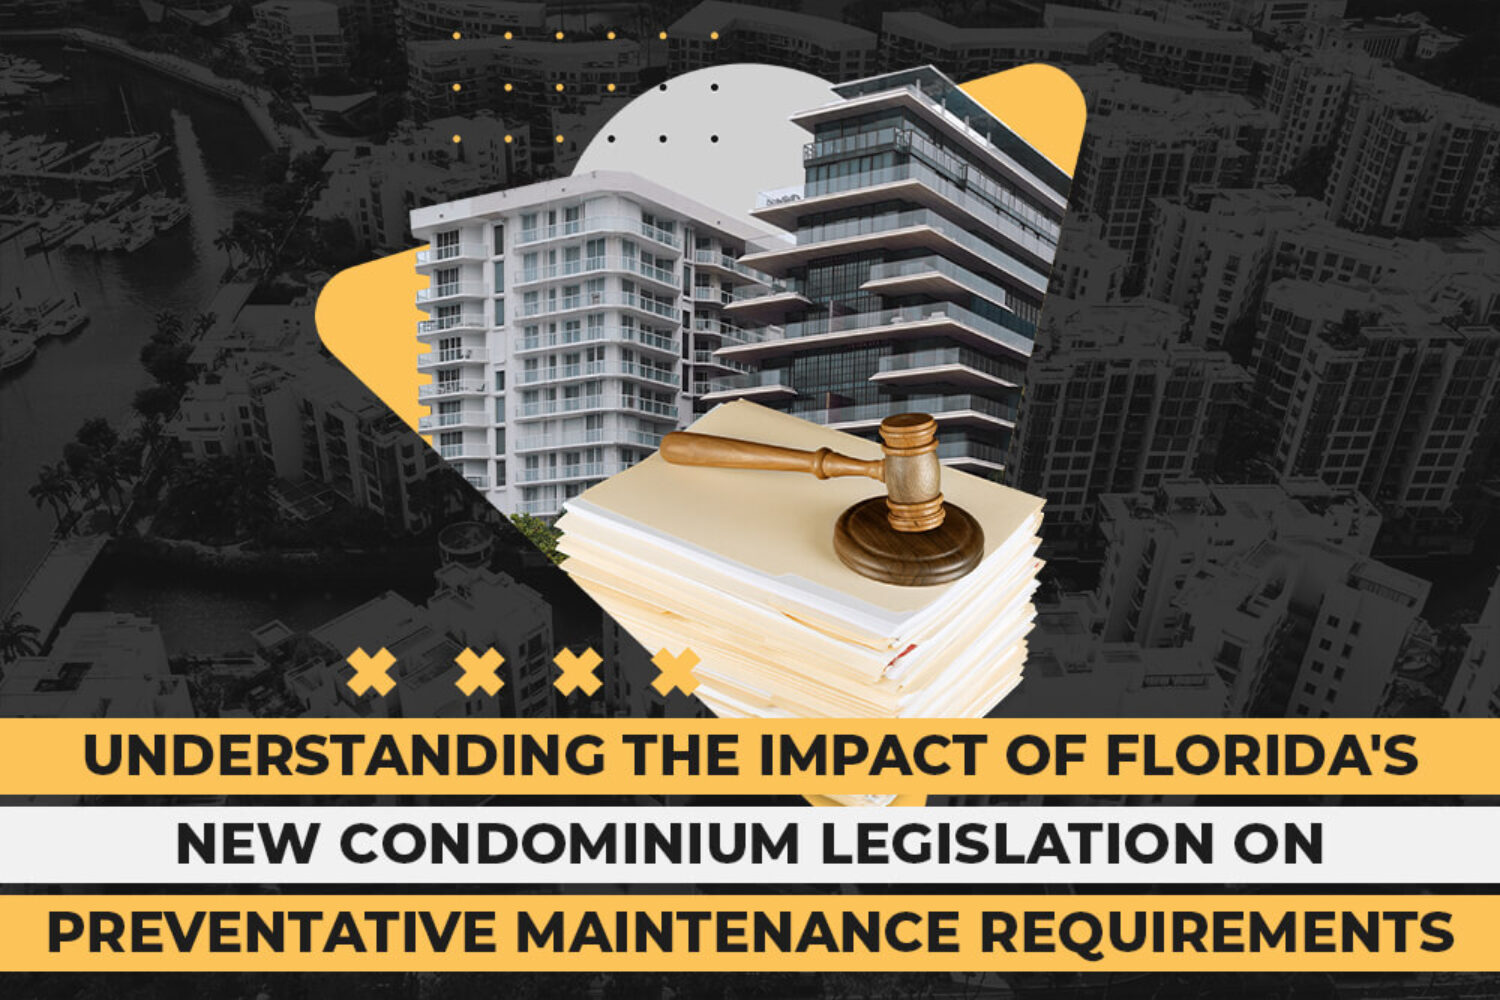 Impact of Florida’s New Legislation on Preventative Maintenance Requirement